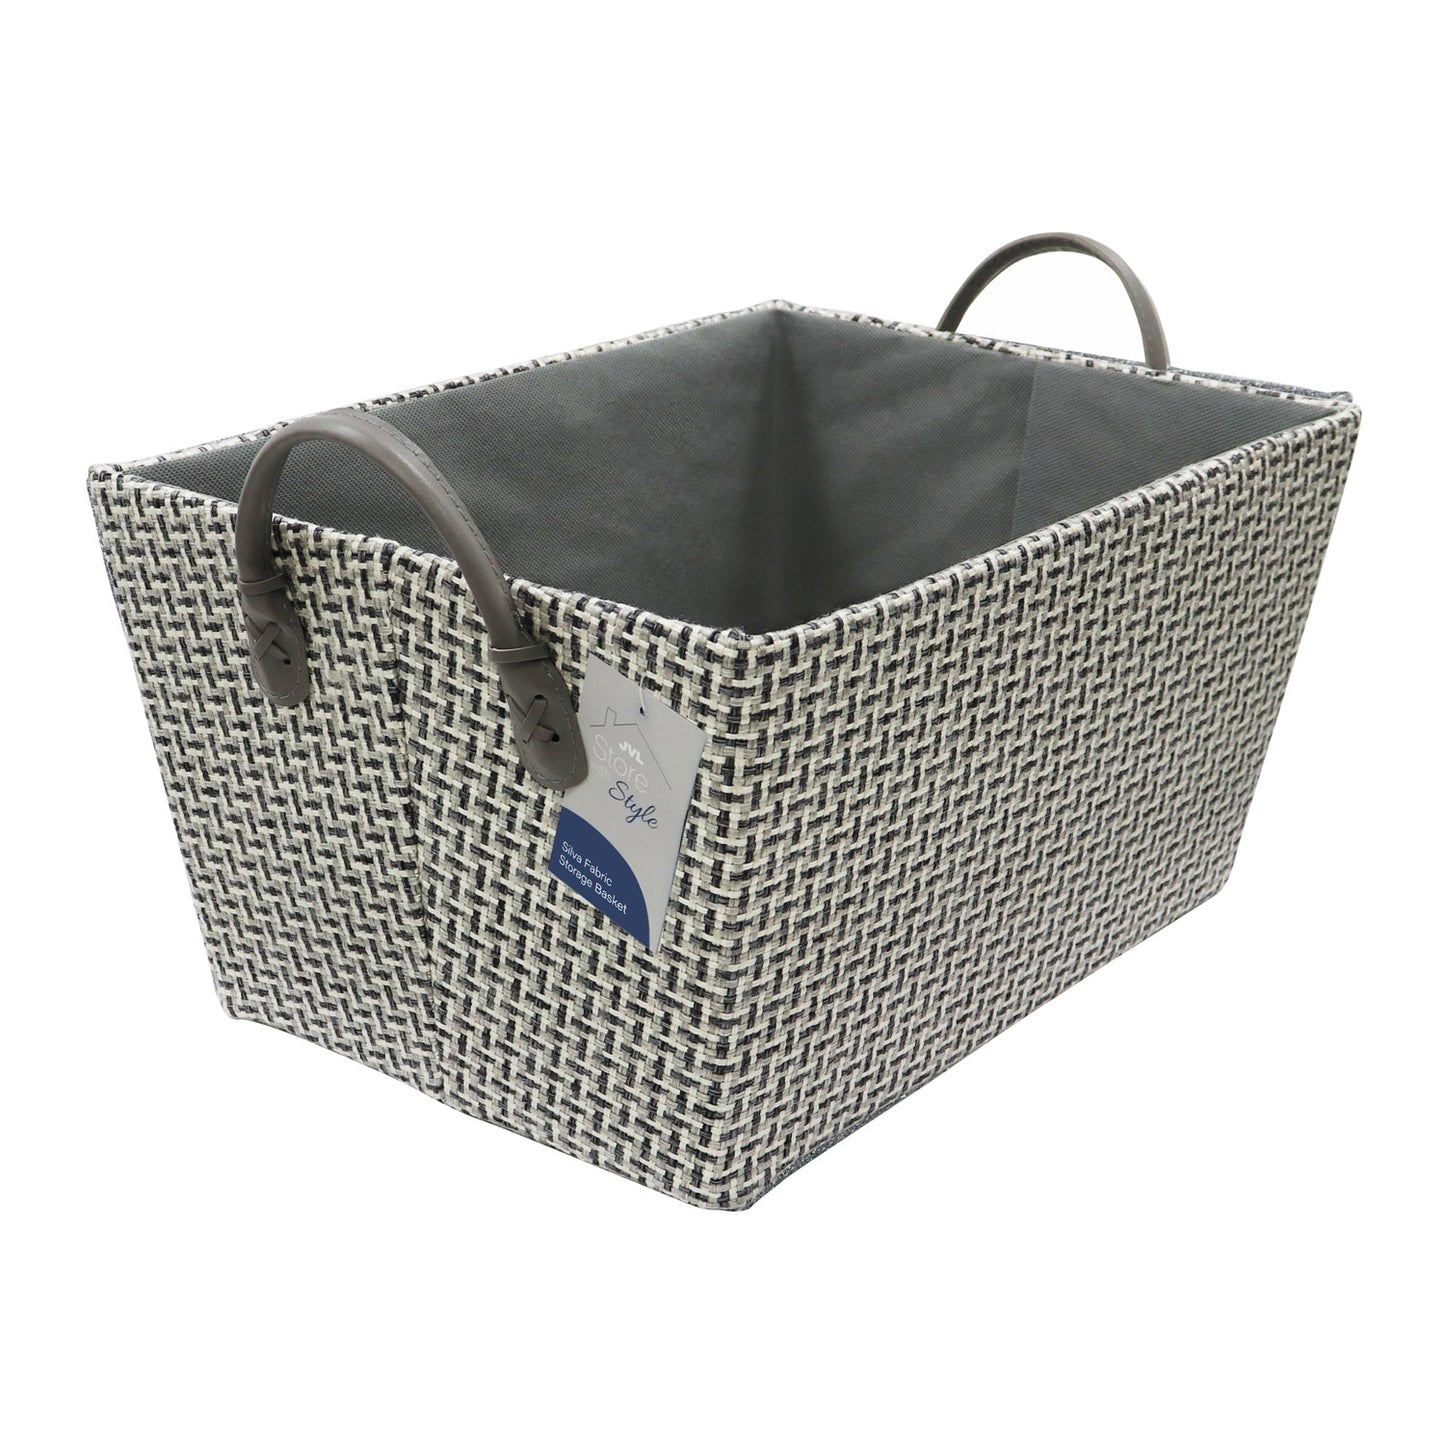 Silva Tapered Rectangular Fabric Storage Basket with Handles